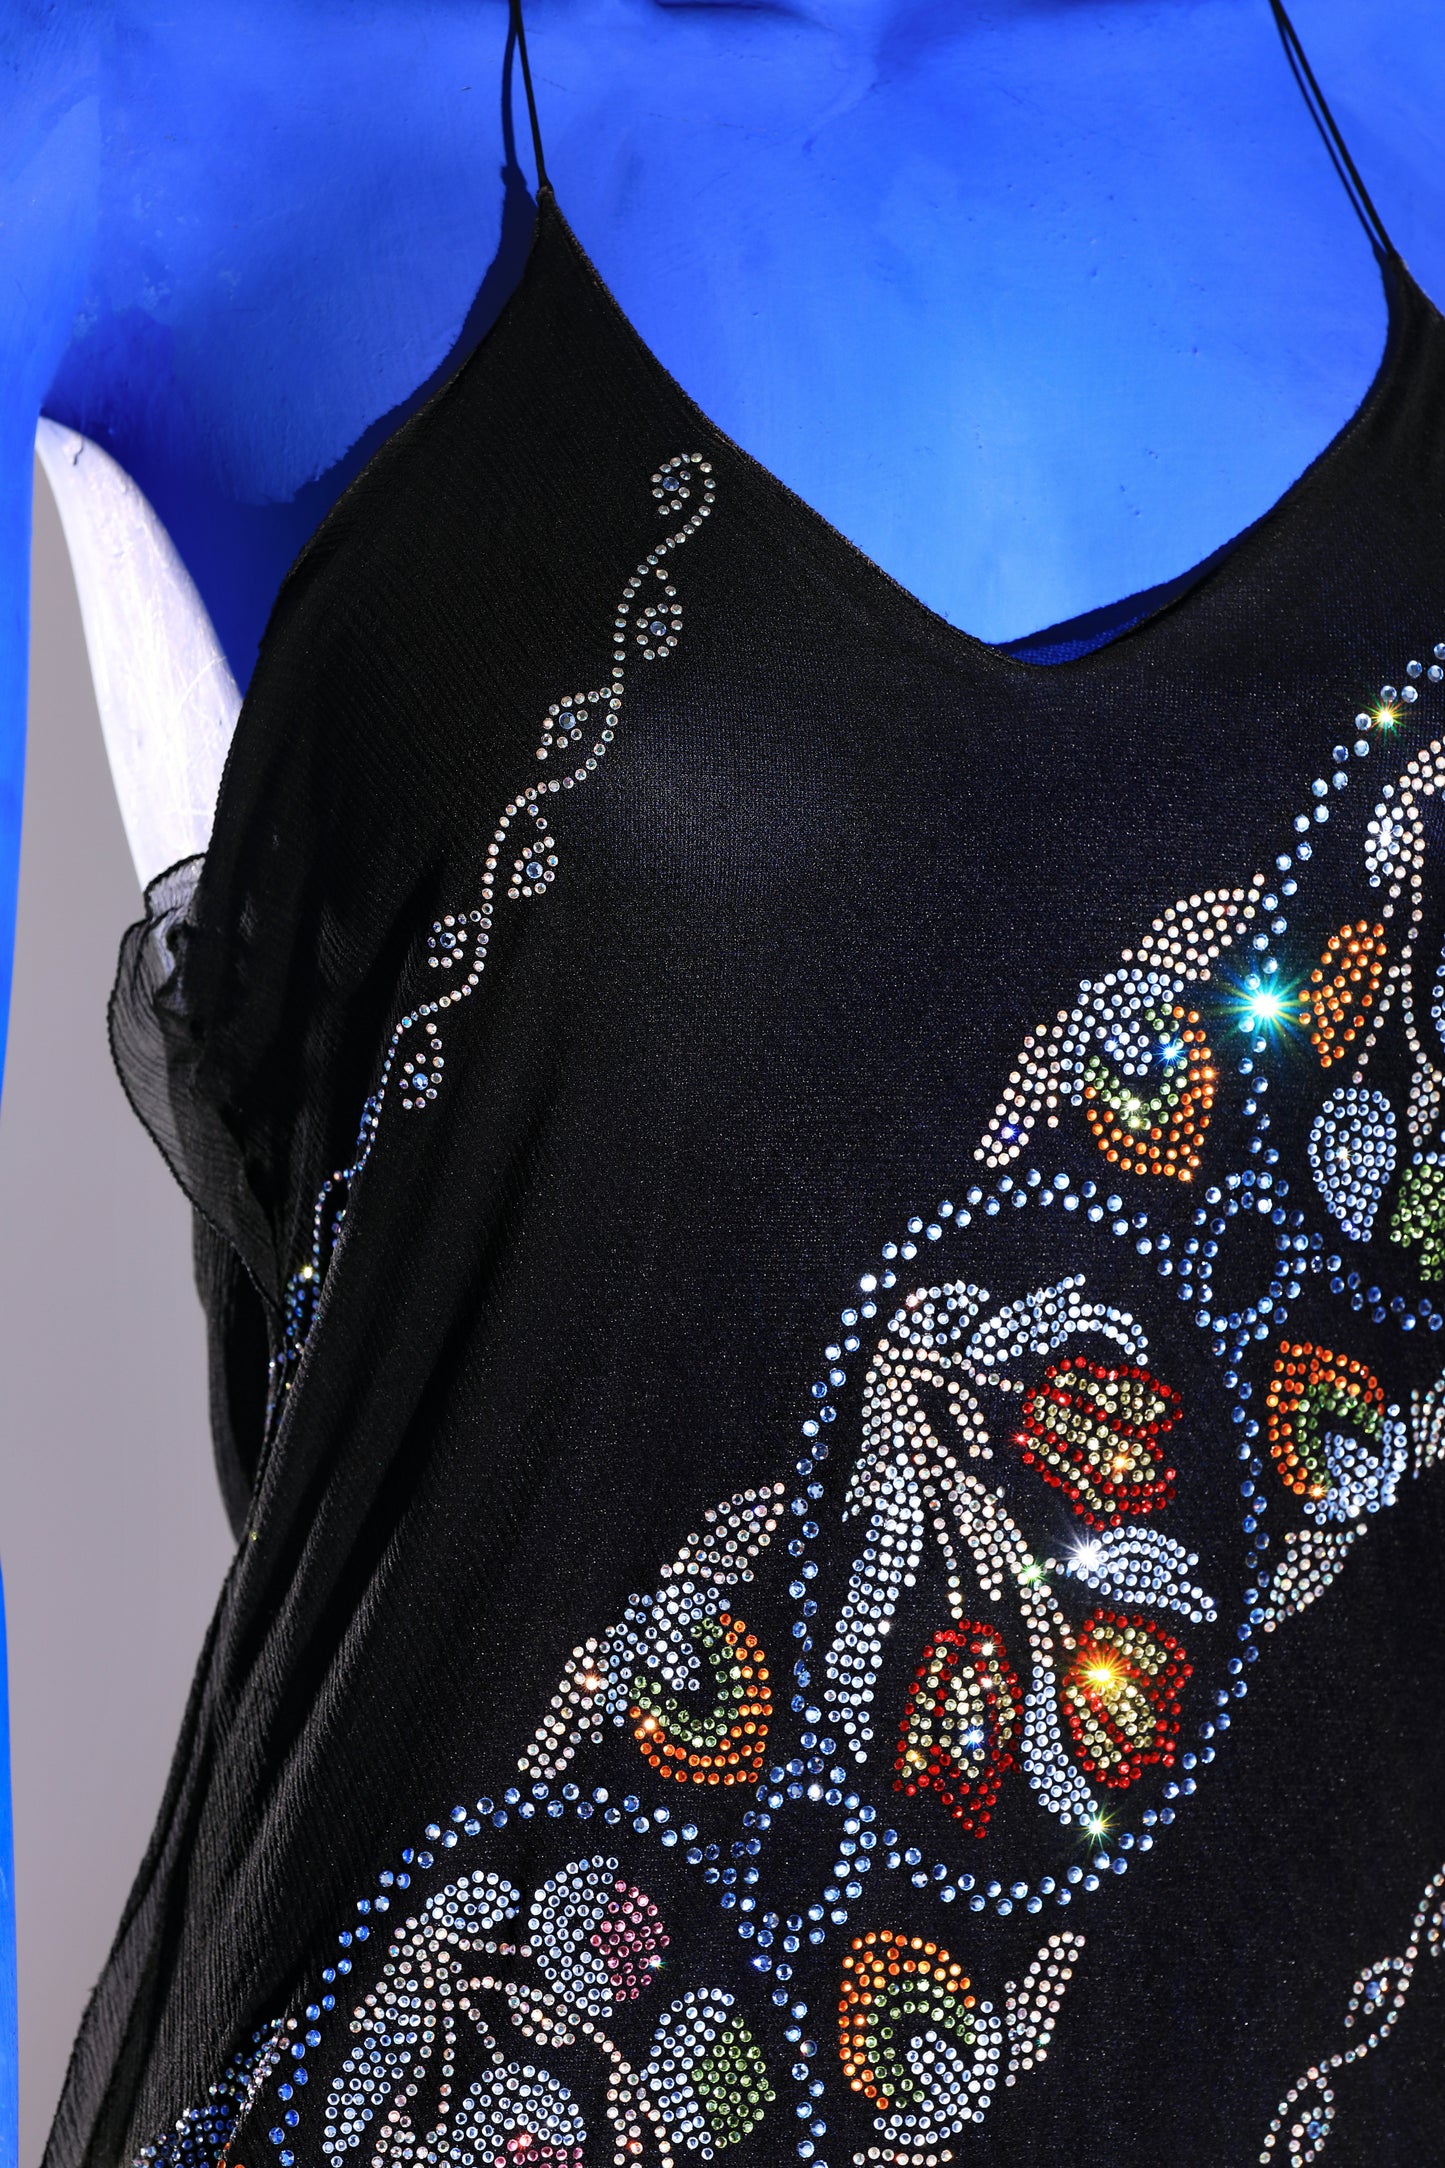 Fendi 90s dress in black chiffon with colored rhinestone applications